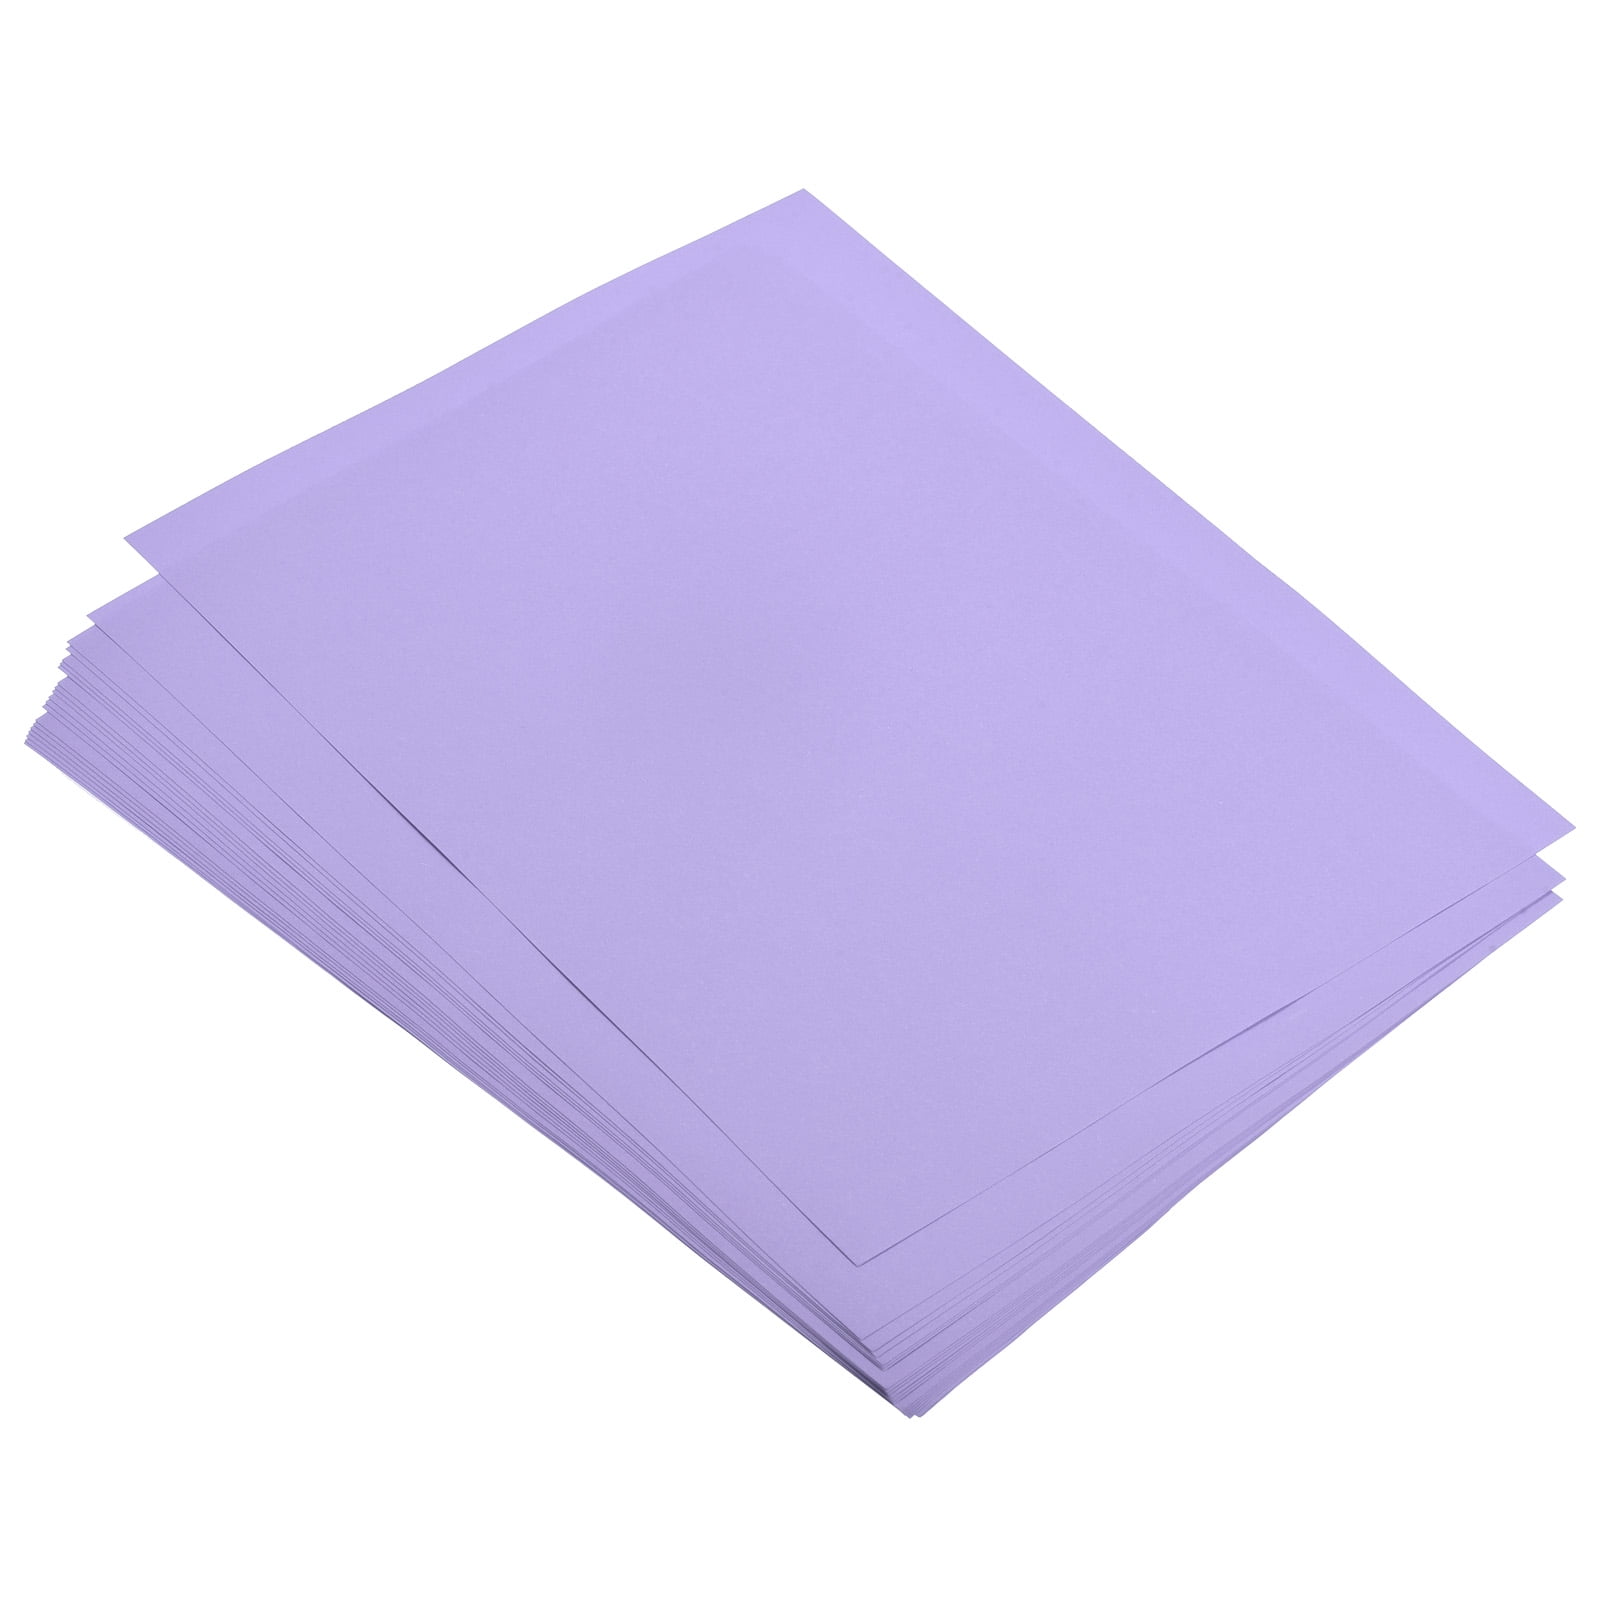 50 Sheets Colored Copy Paper 8 1/2 Inch Printer Paper 22lb/80gsm Light Blue